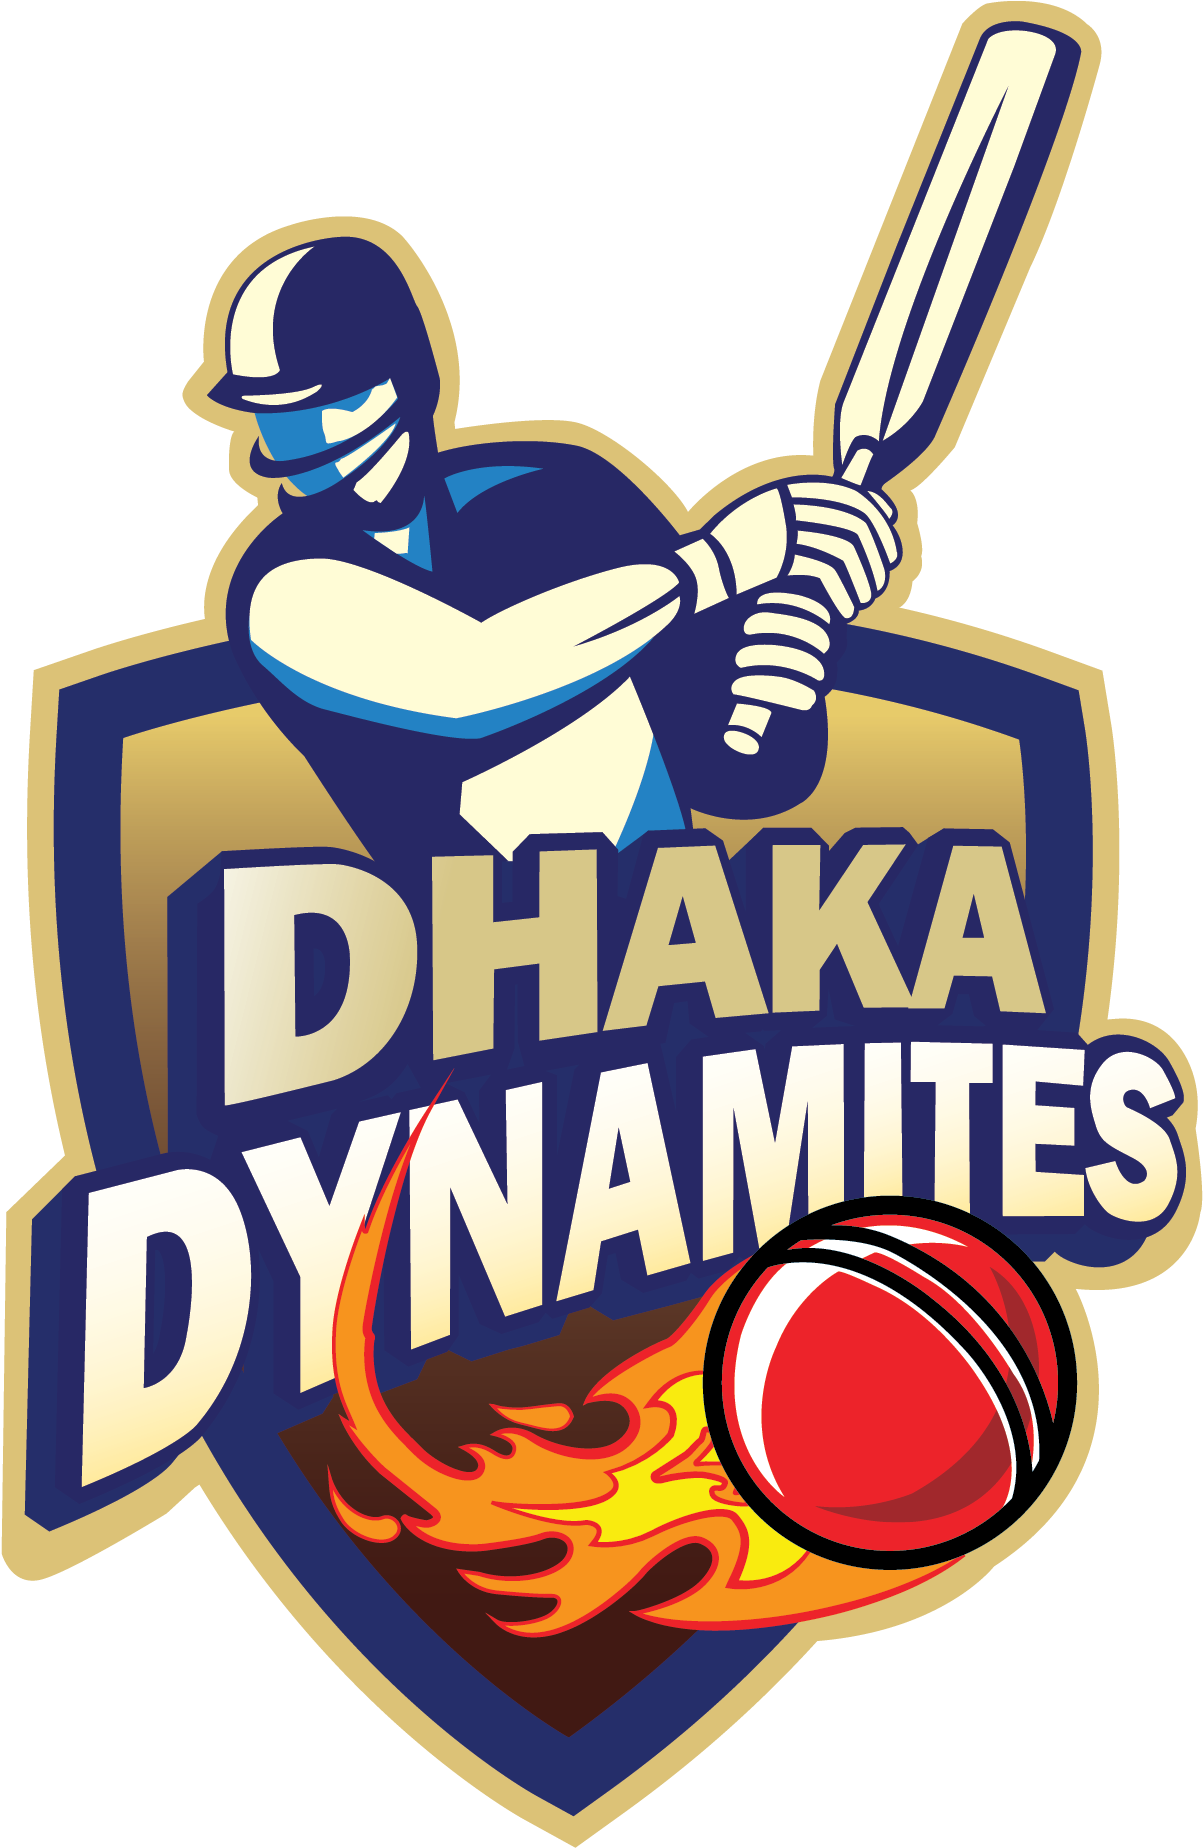 Dhaka Dynamites Team Logo - Dhaka Dynamites Vs Rangpur Riders (1251x1847)